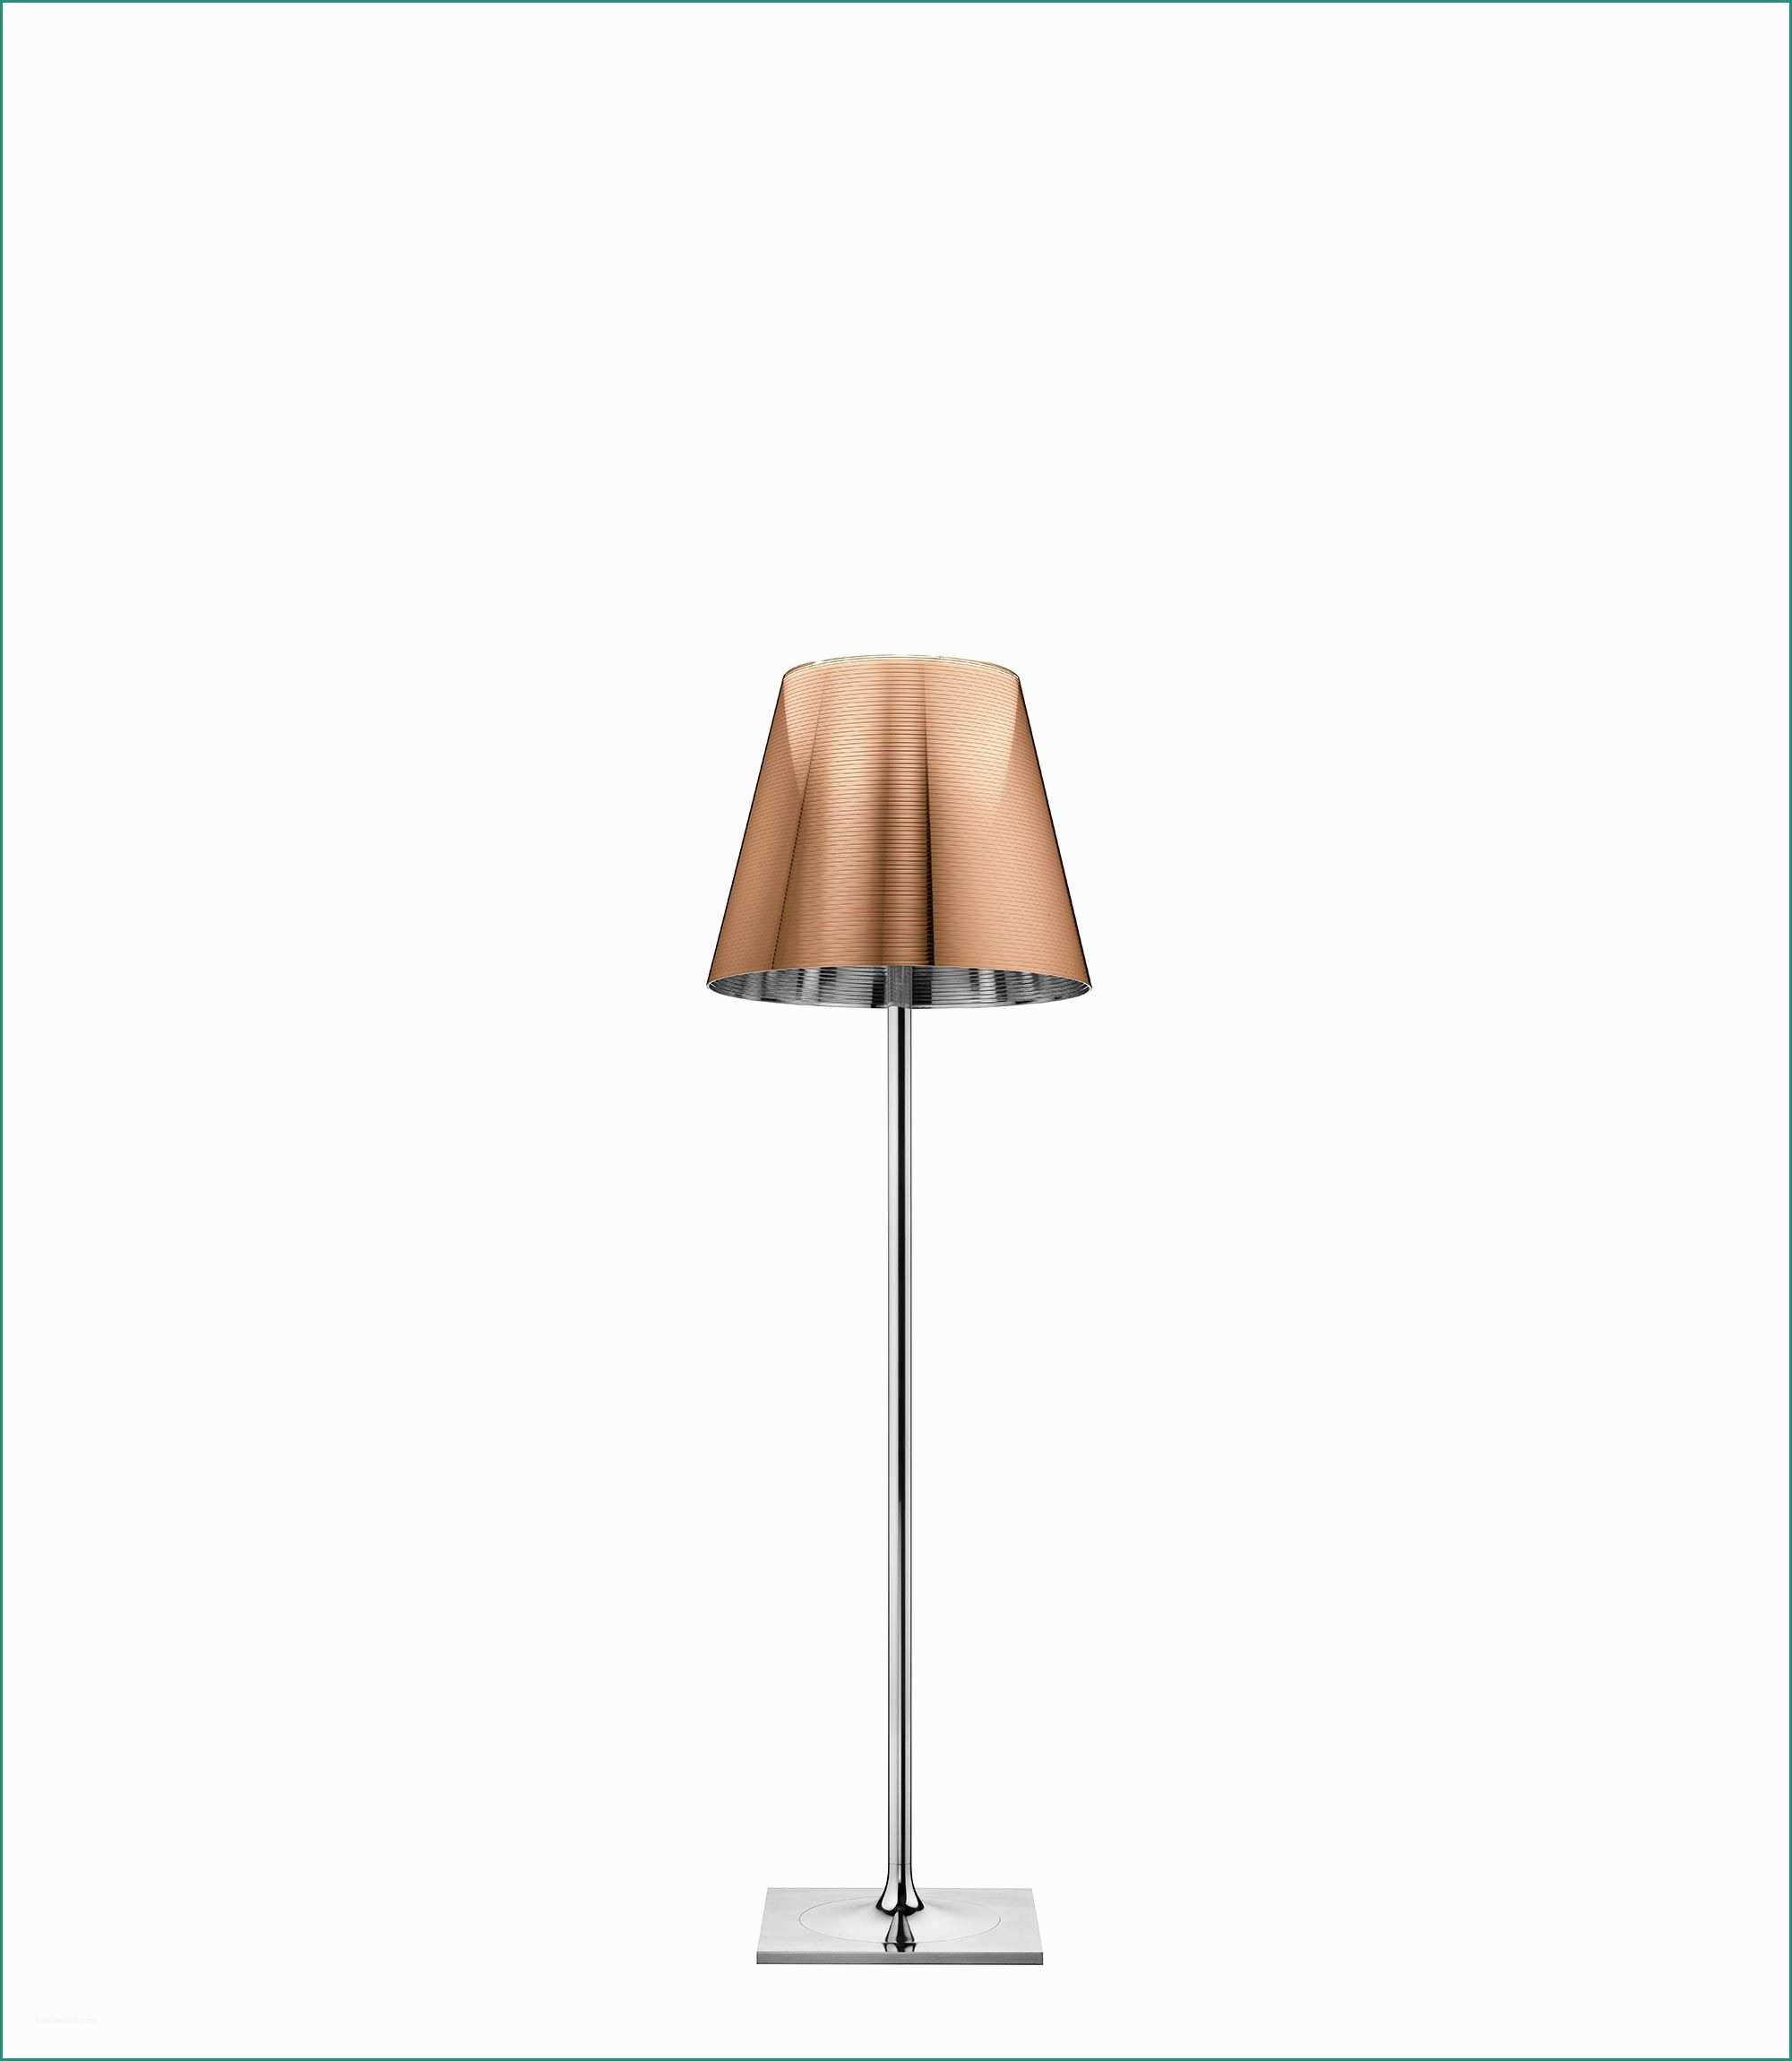 Lampada Arco Flos E Floor Lamp Providing Diffused Lighting